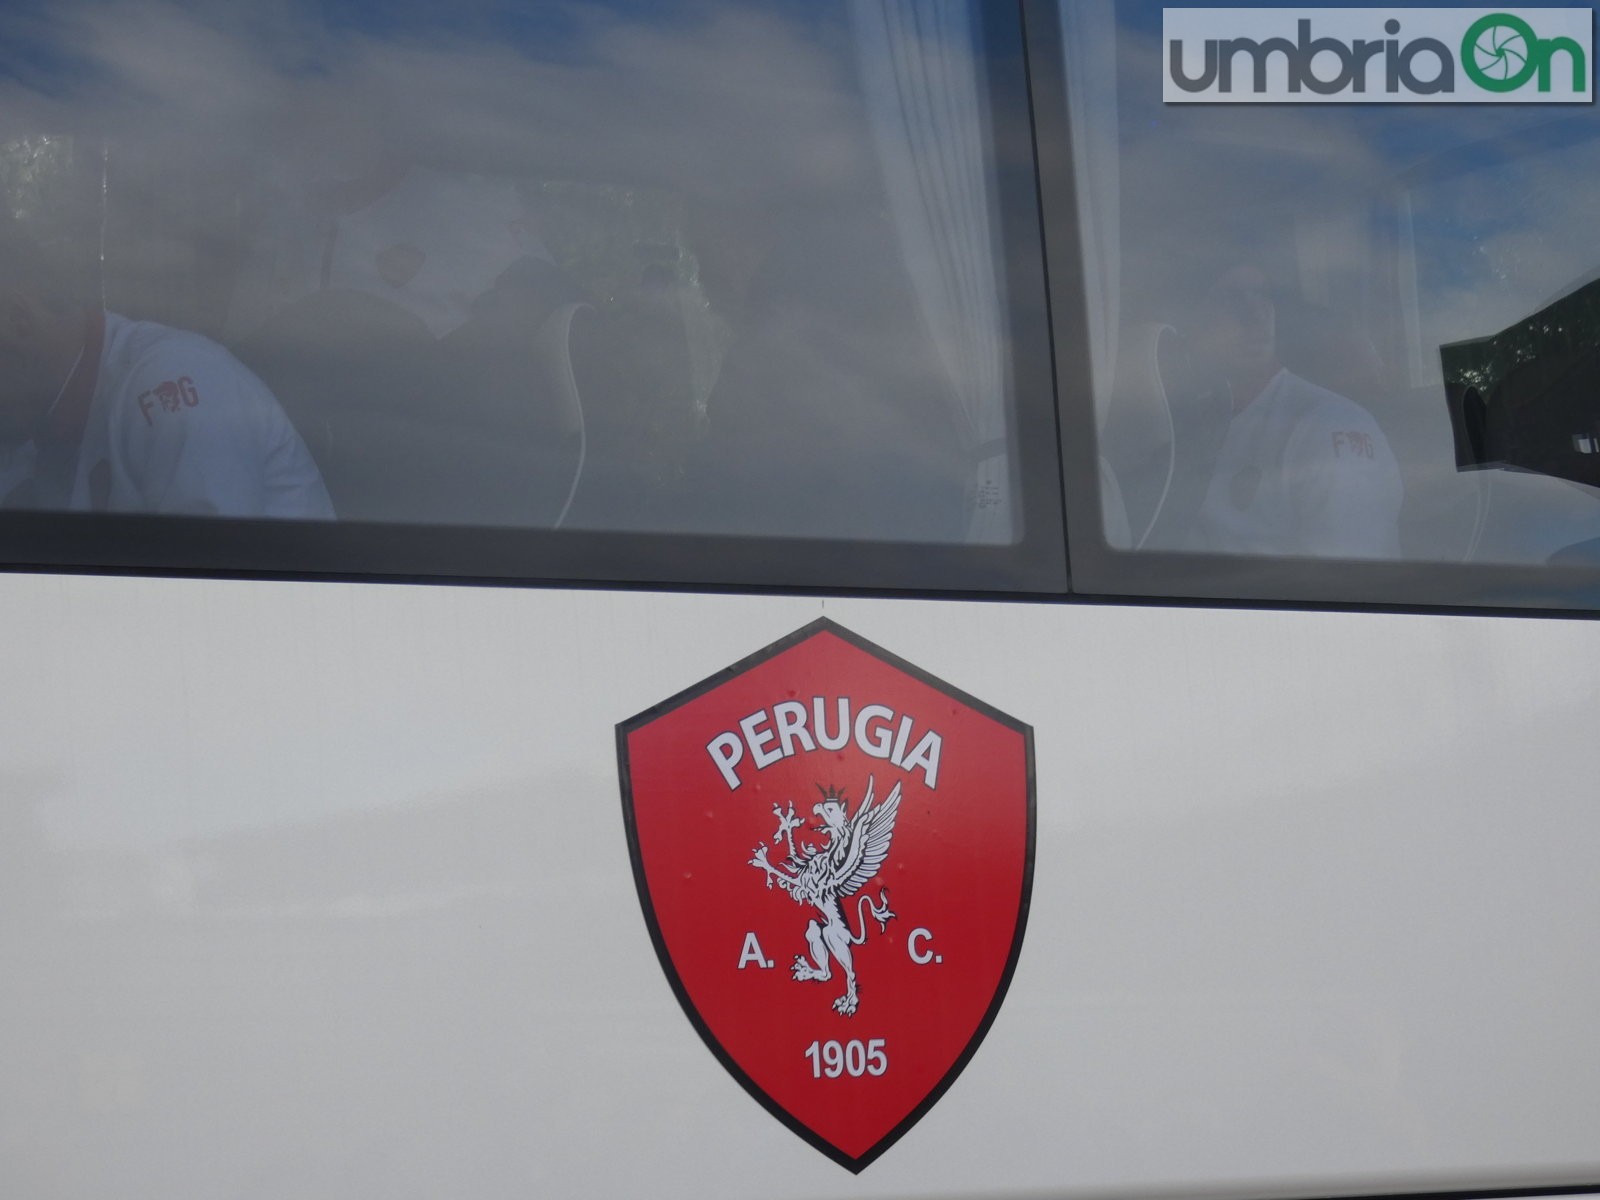 Pullman-Perugia-derby-2-FILEminimizer